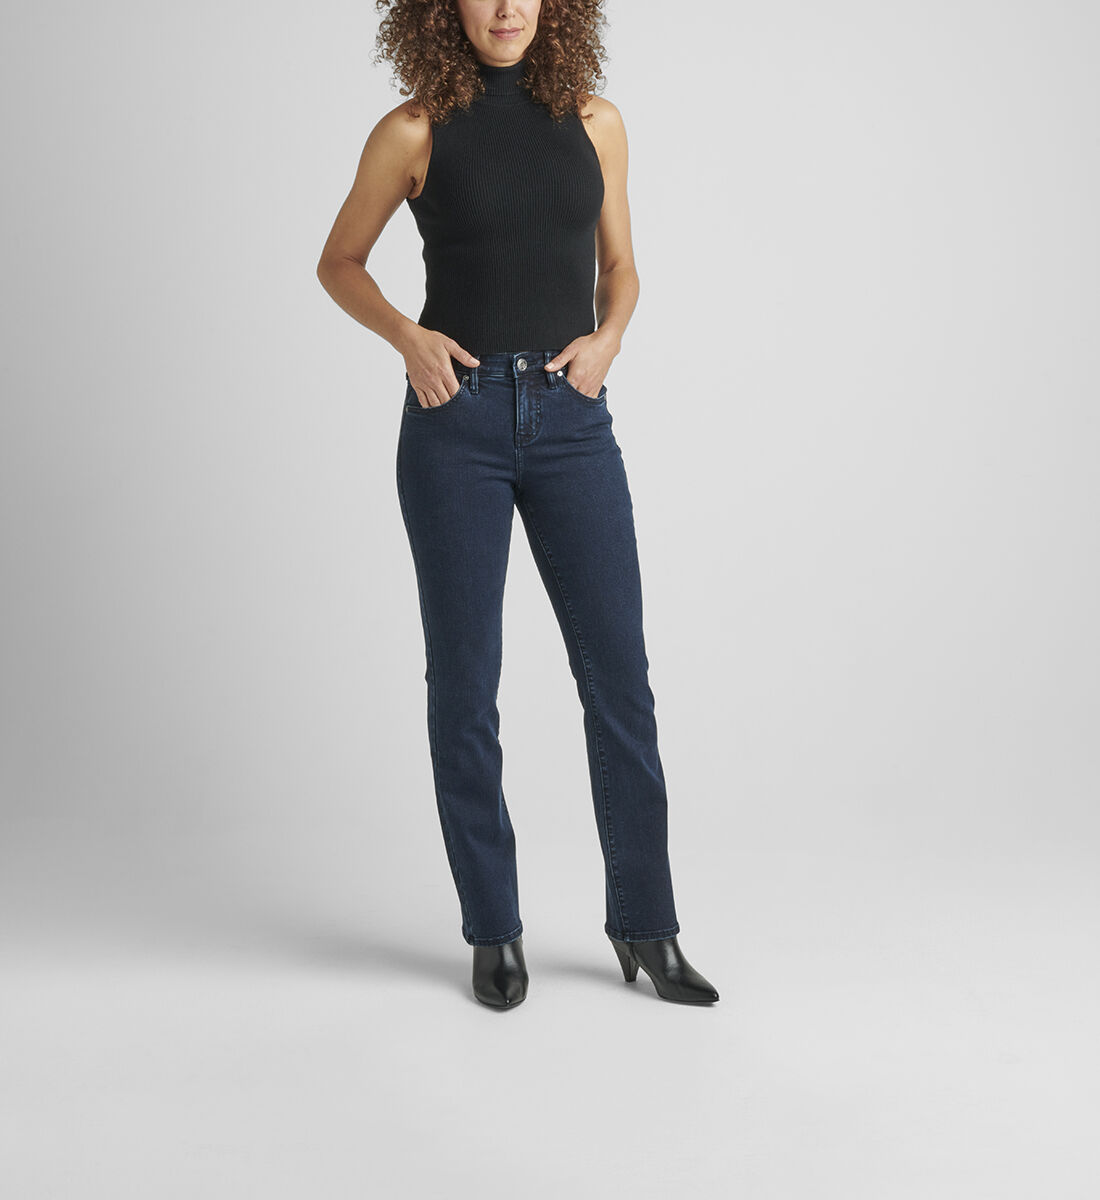 Eloise Mid Rise Bootcut Jeans Petite Front